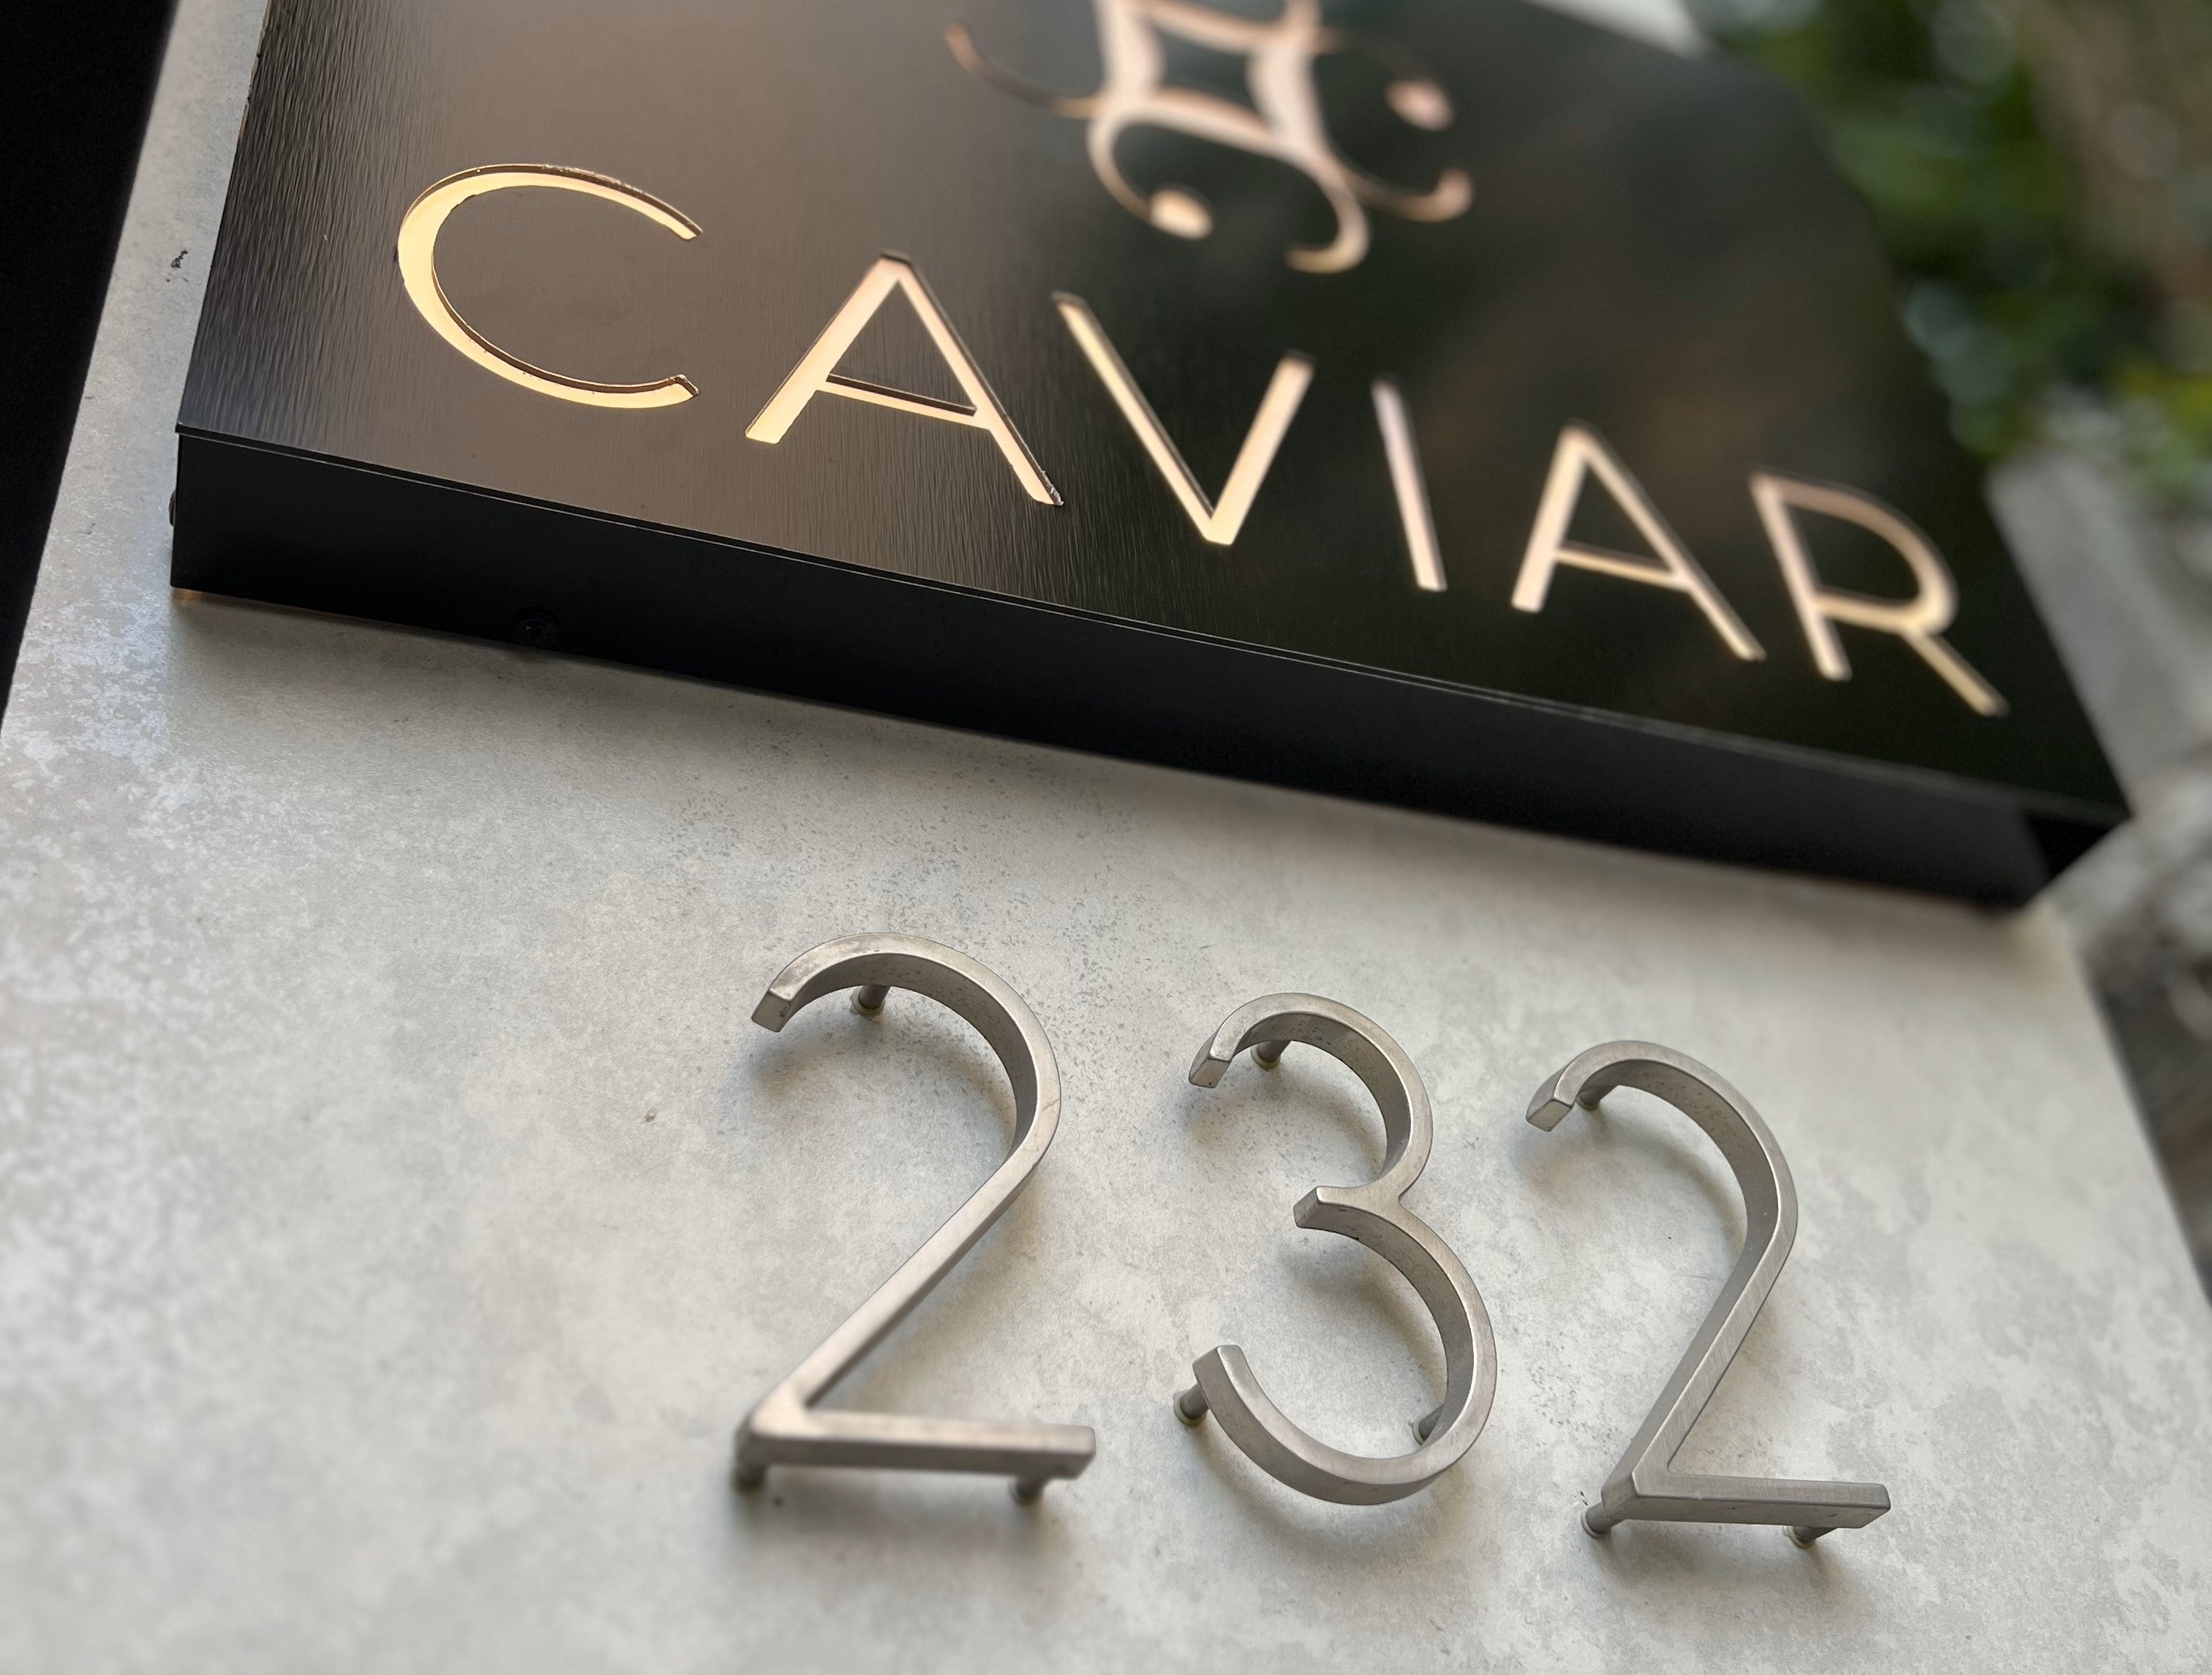 CAVIAR - caviarbydnhg